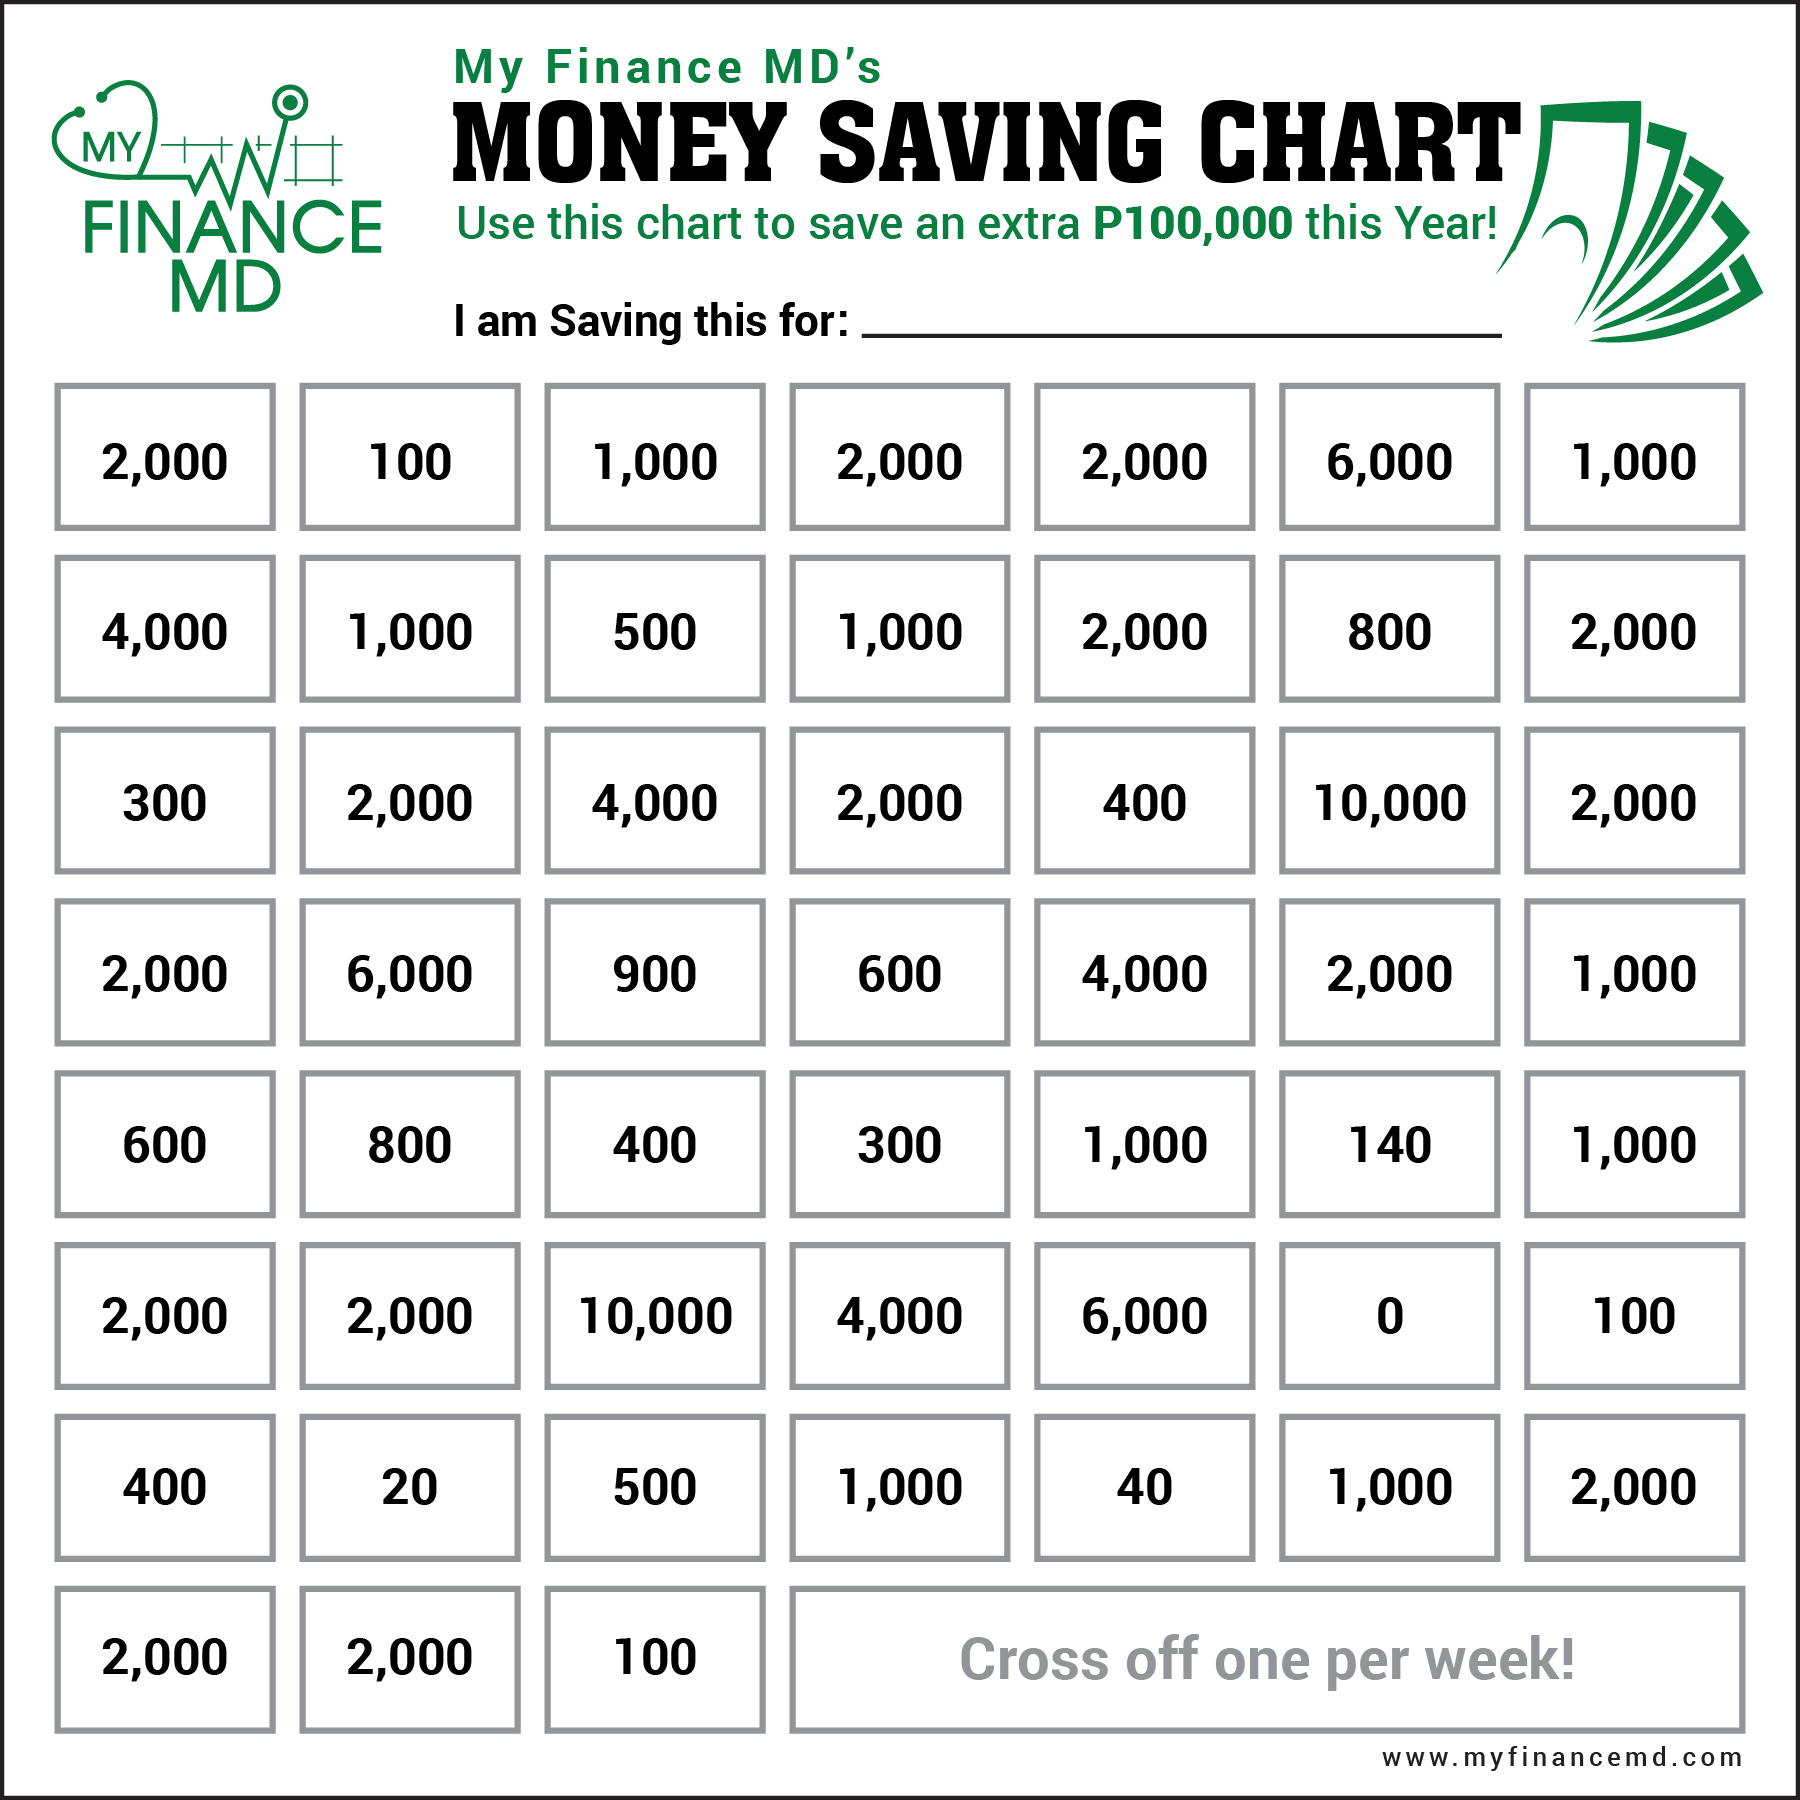 Money Saving Chart MyFinanceMD 02 My Finance MD